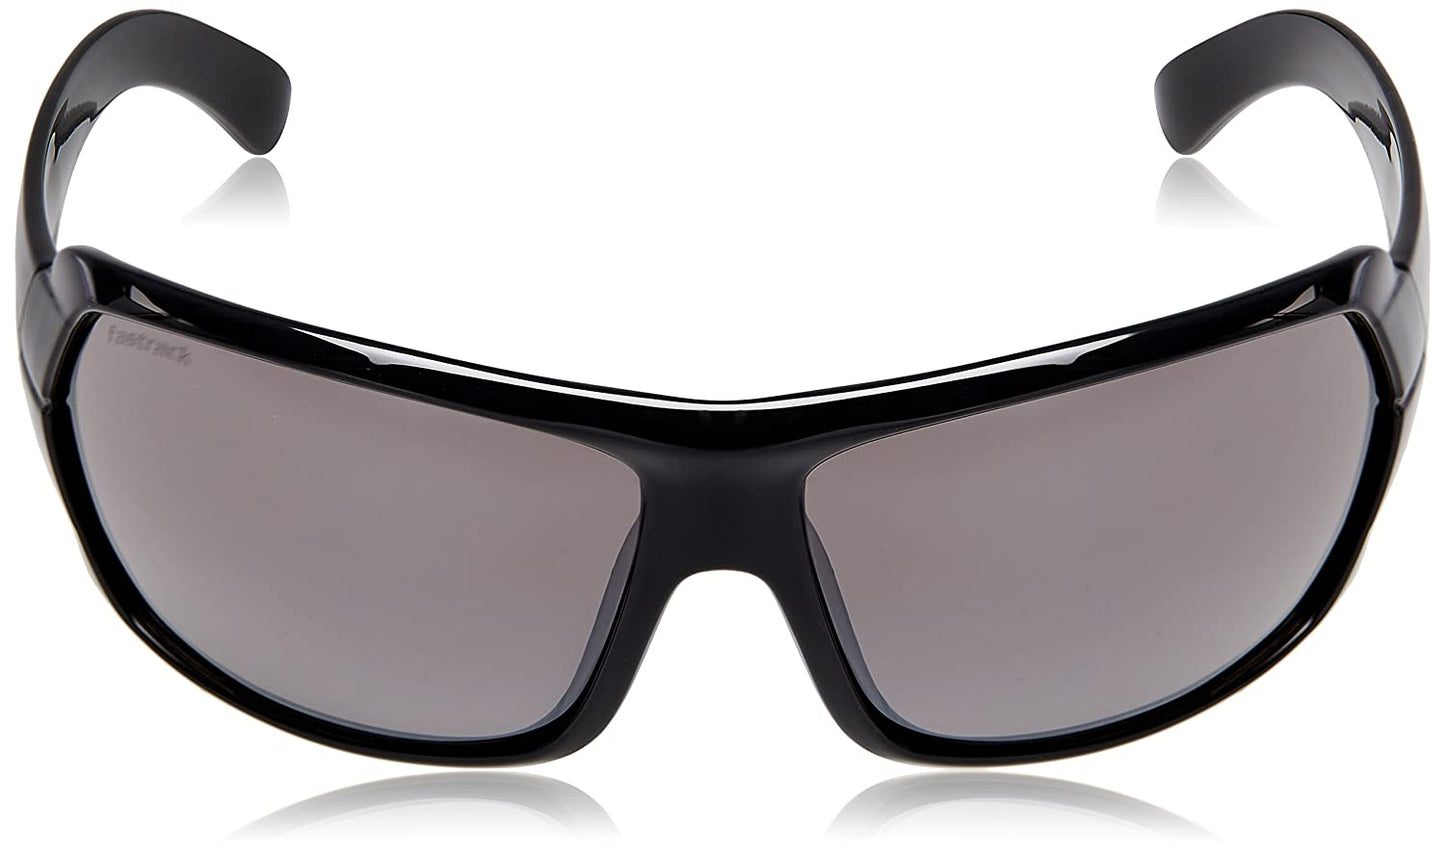 Fastrack Black Wraparound Sunglasses P190BK1